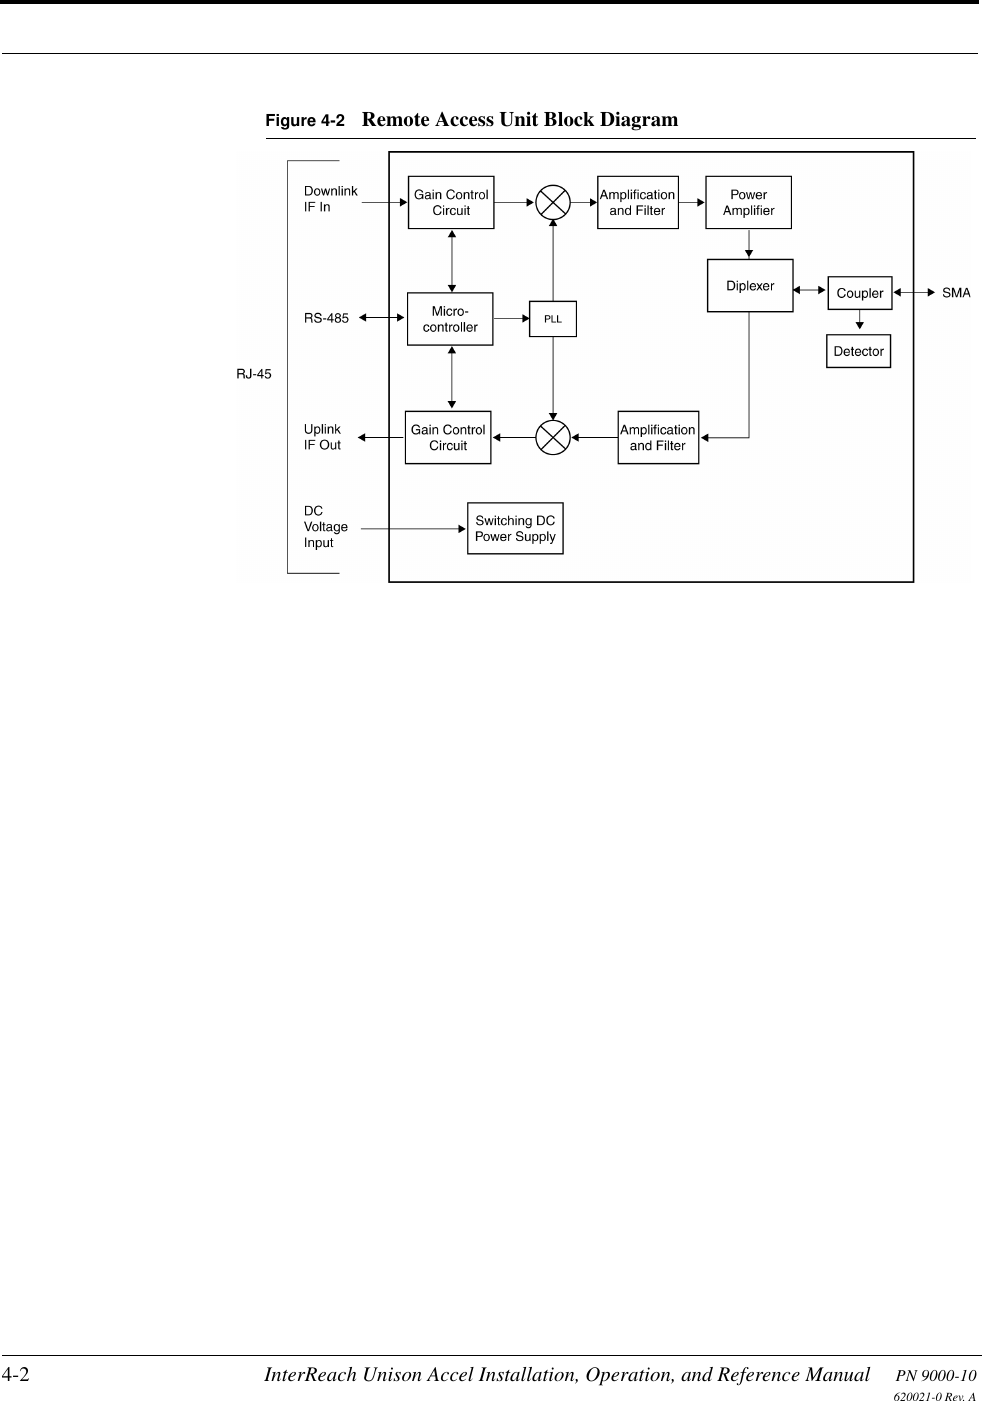 4-2 InterReach Unison Accel Installation, Operation, and Reference Manual PN 9000-10620021-0 Rev. AFigure 4-2 Remote Access Unit Block Diagram